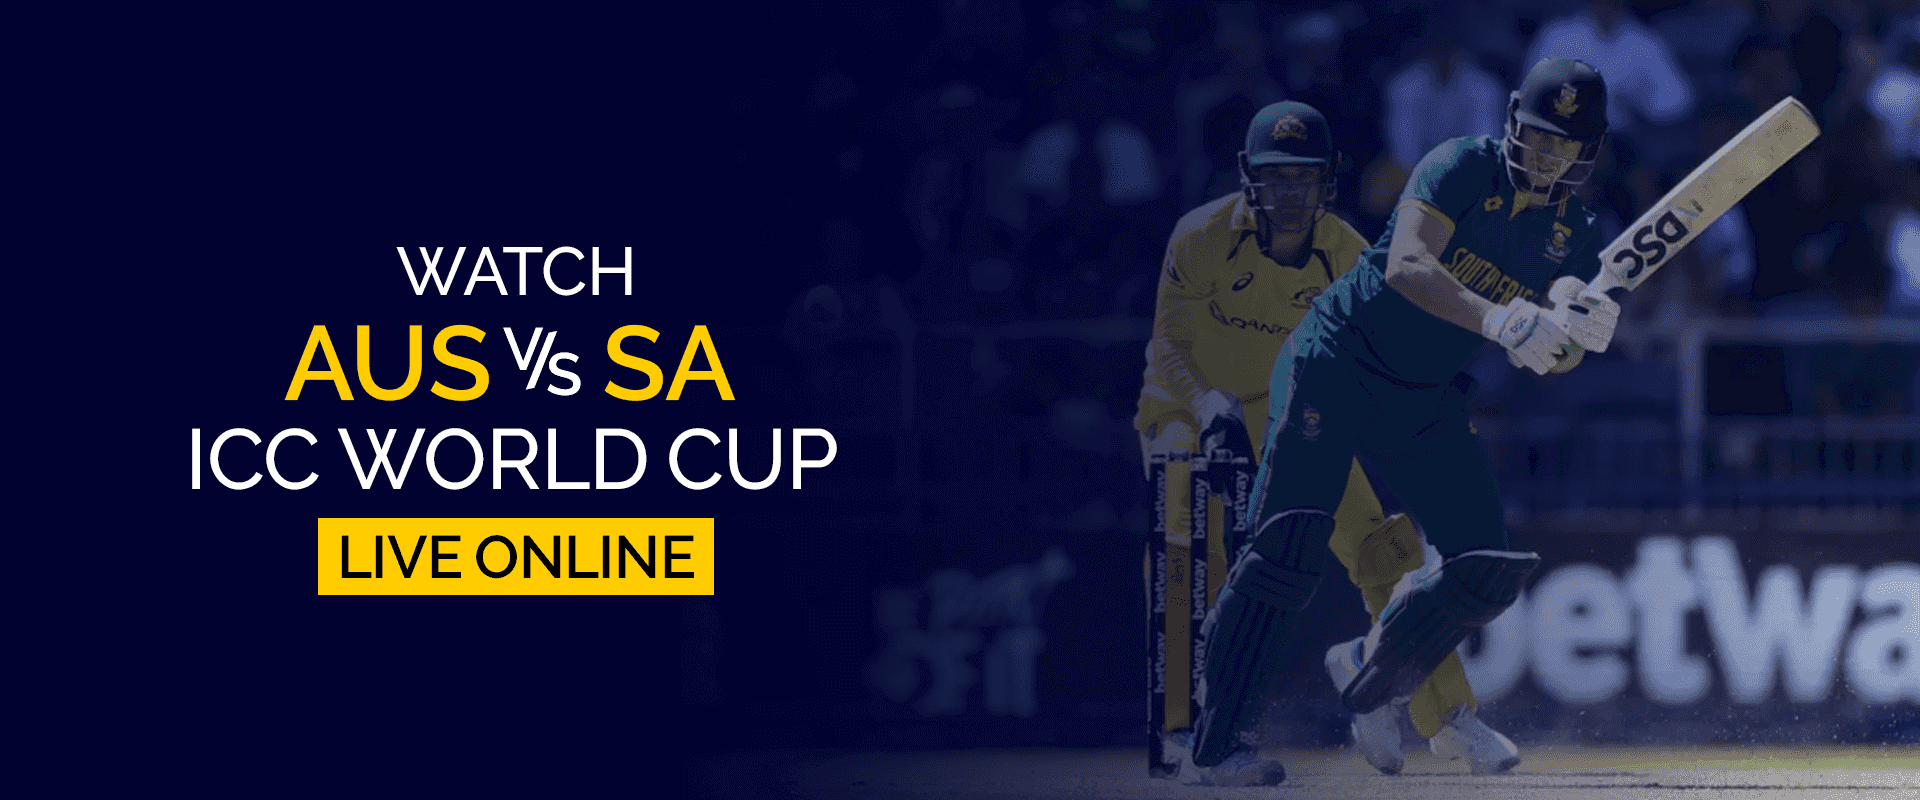 Watch AUS vs SA ICC World Cup Live Online